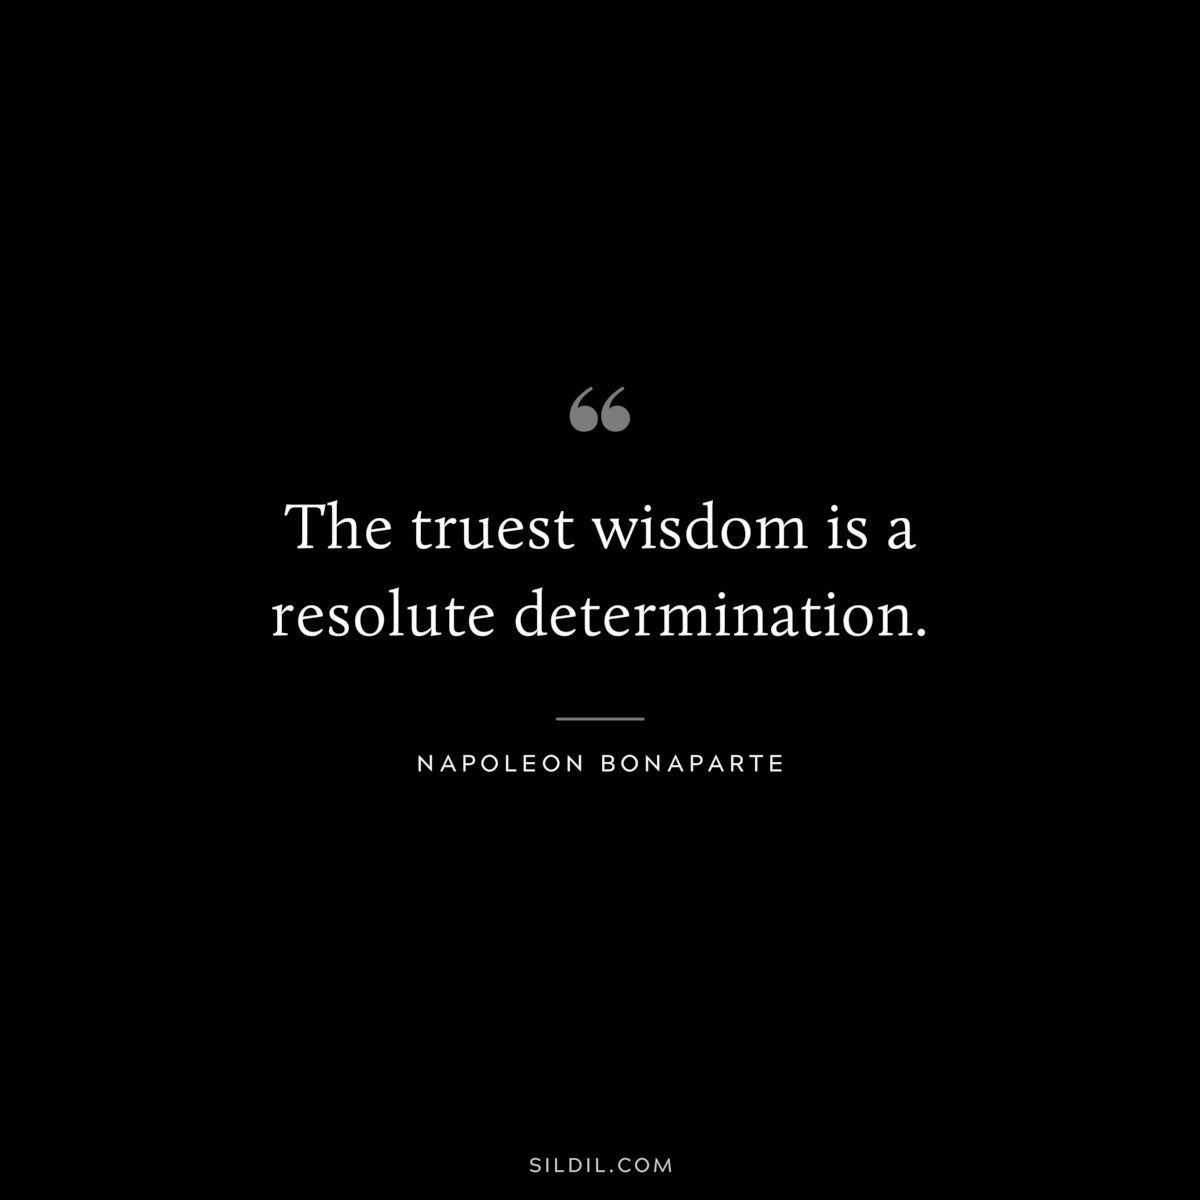 The truest wisdom is a resolute determination. ― Napoleon Bonaparte